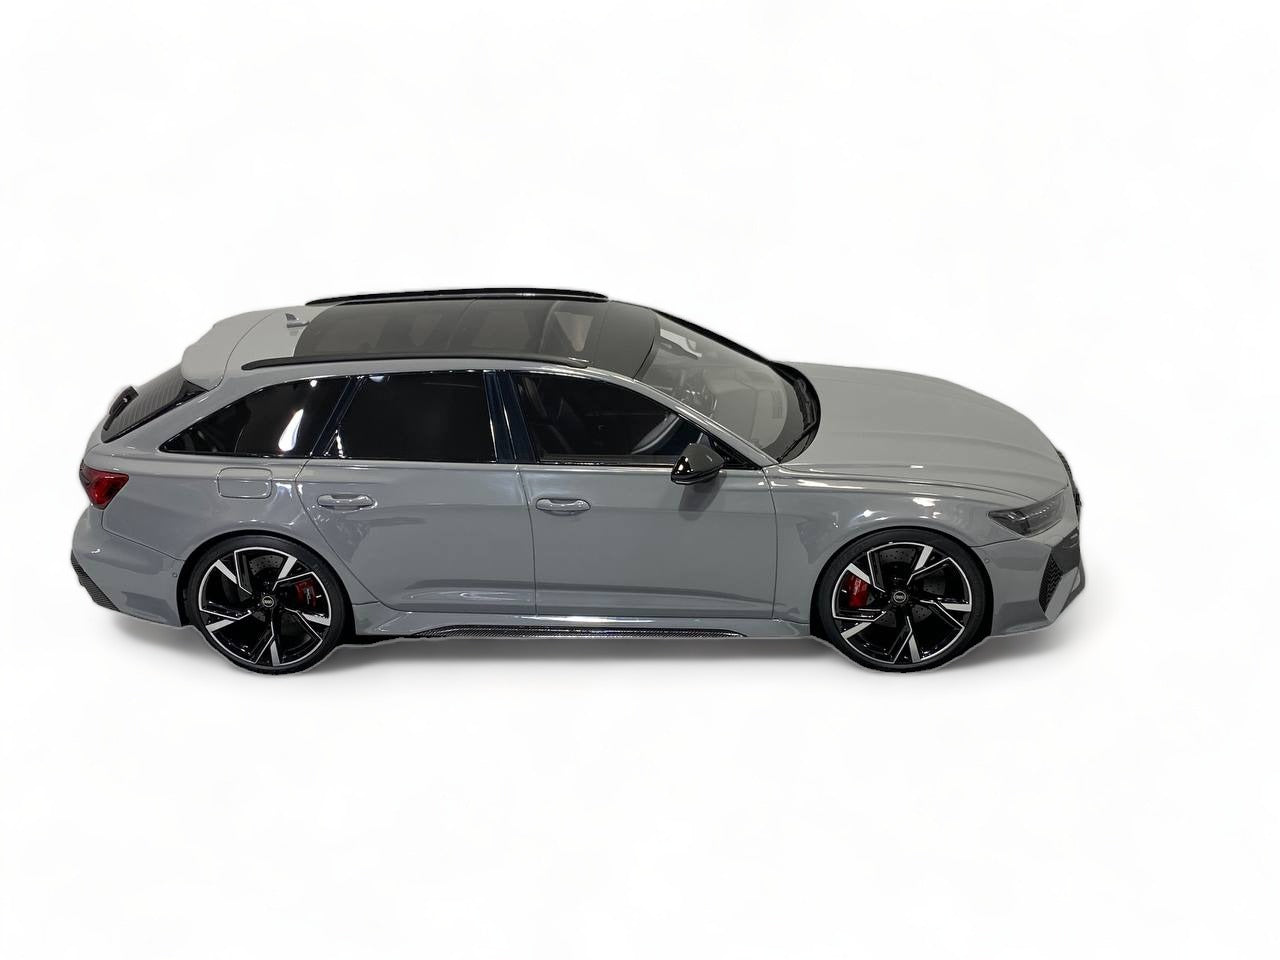 1/18 Diecast Motor Helix Audi RS 7 AVANT GREY Scale Model Car|Sold in Dturman.com Dubai UAE.